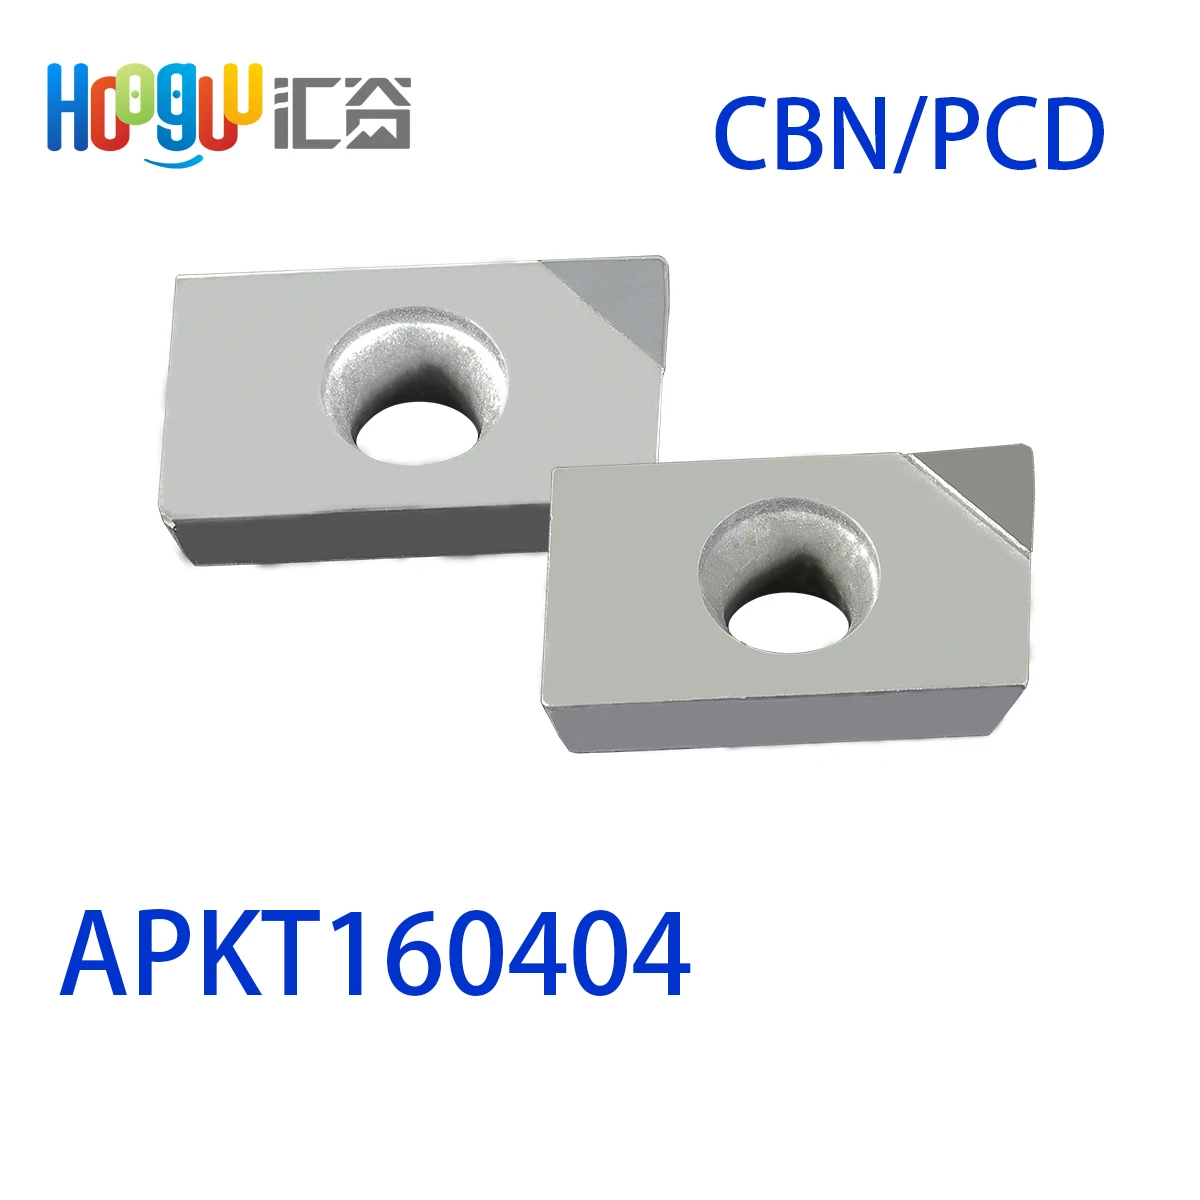 High Quality PCD CBN APKT160404 Milling Tool APKT CNC Lathe Machine Carbide Inserts Tools